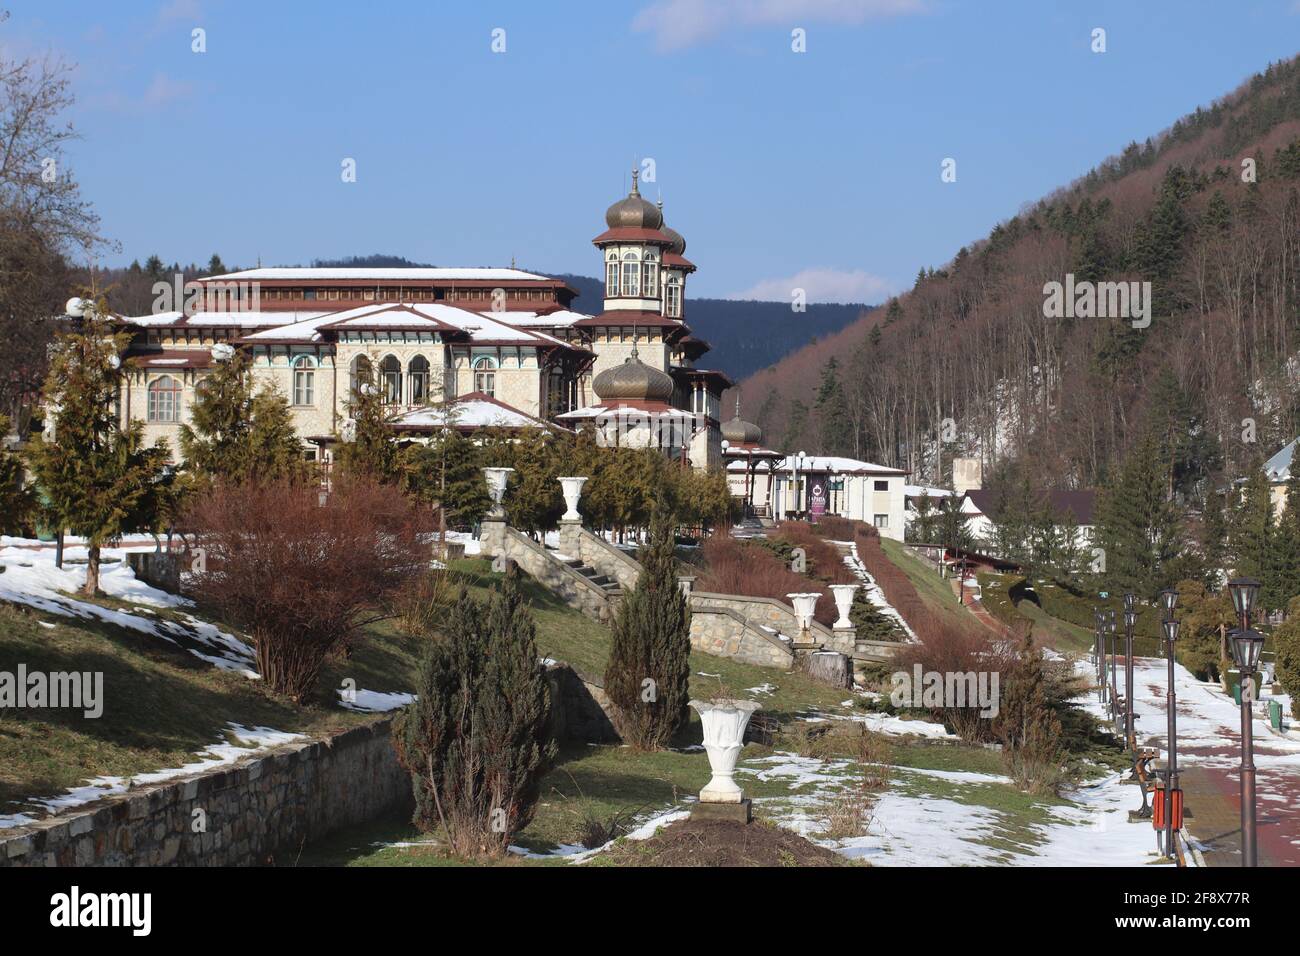 SLANIC MOLDOVA, BACAU, ROMANIA - MARCH 28, 2018: View of old casino and castle hotels, in Slanic Moldova, Romania Stock Photo